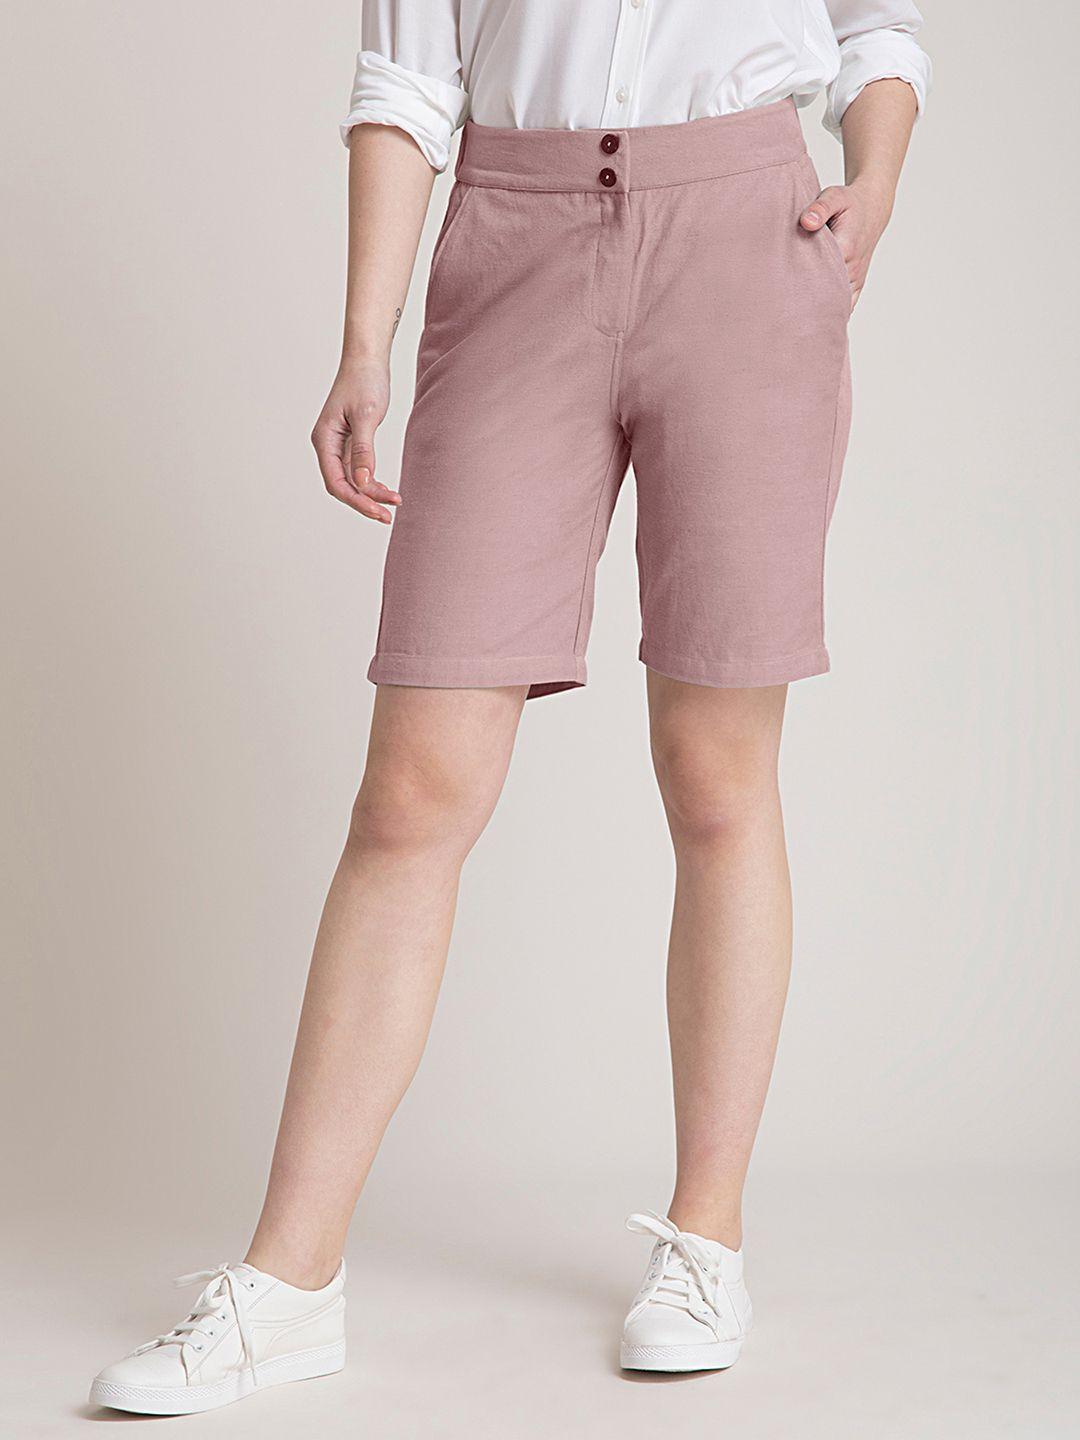 fablestreet women pink slim fit regular shorts